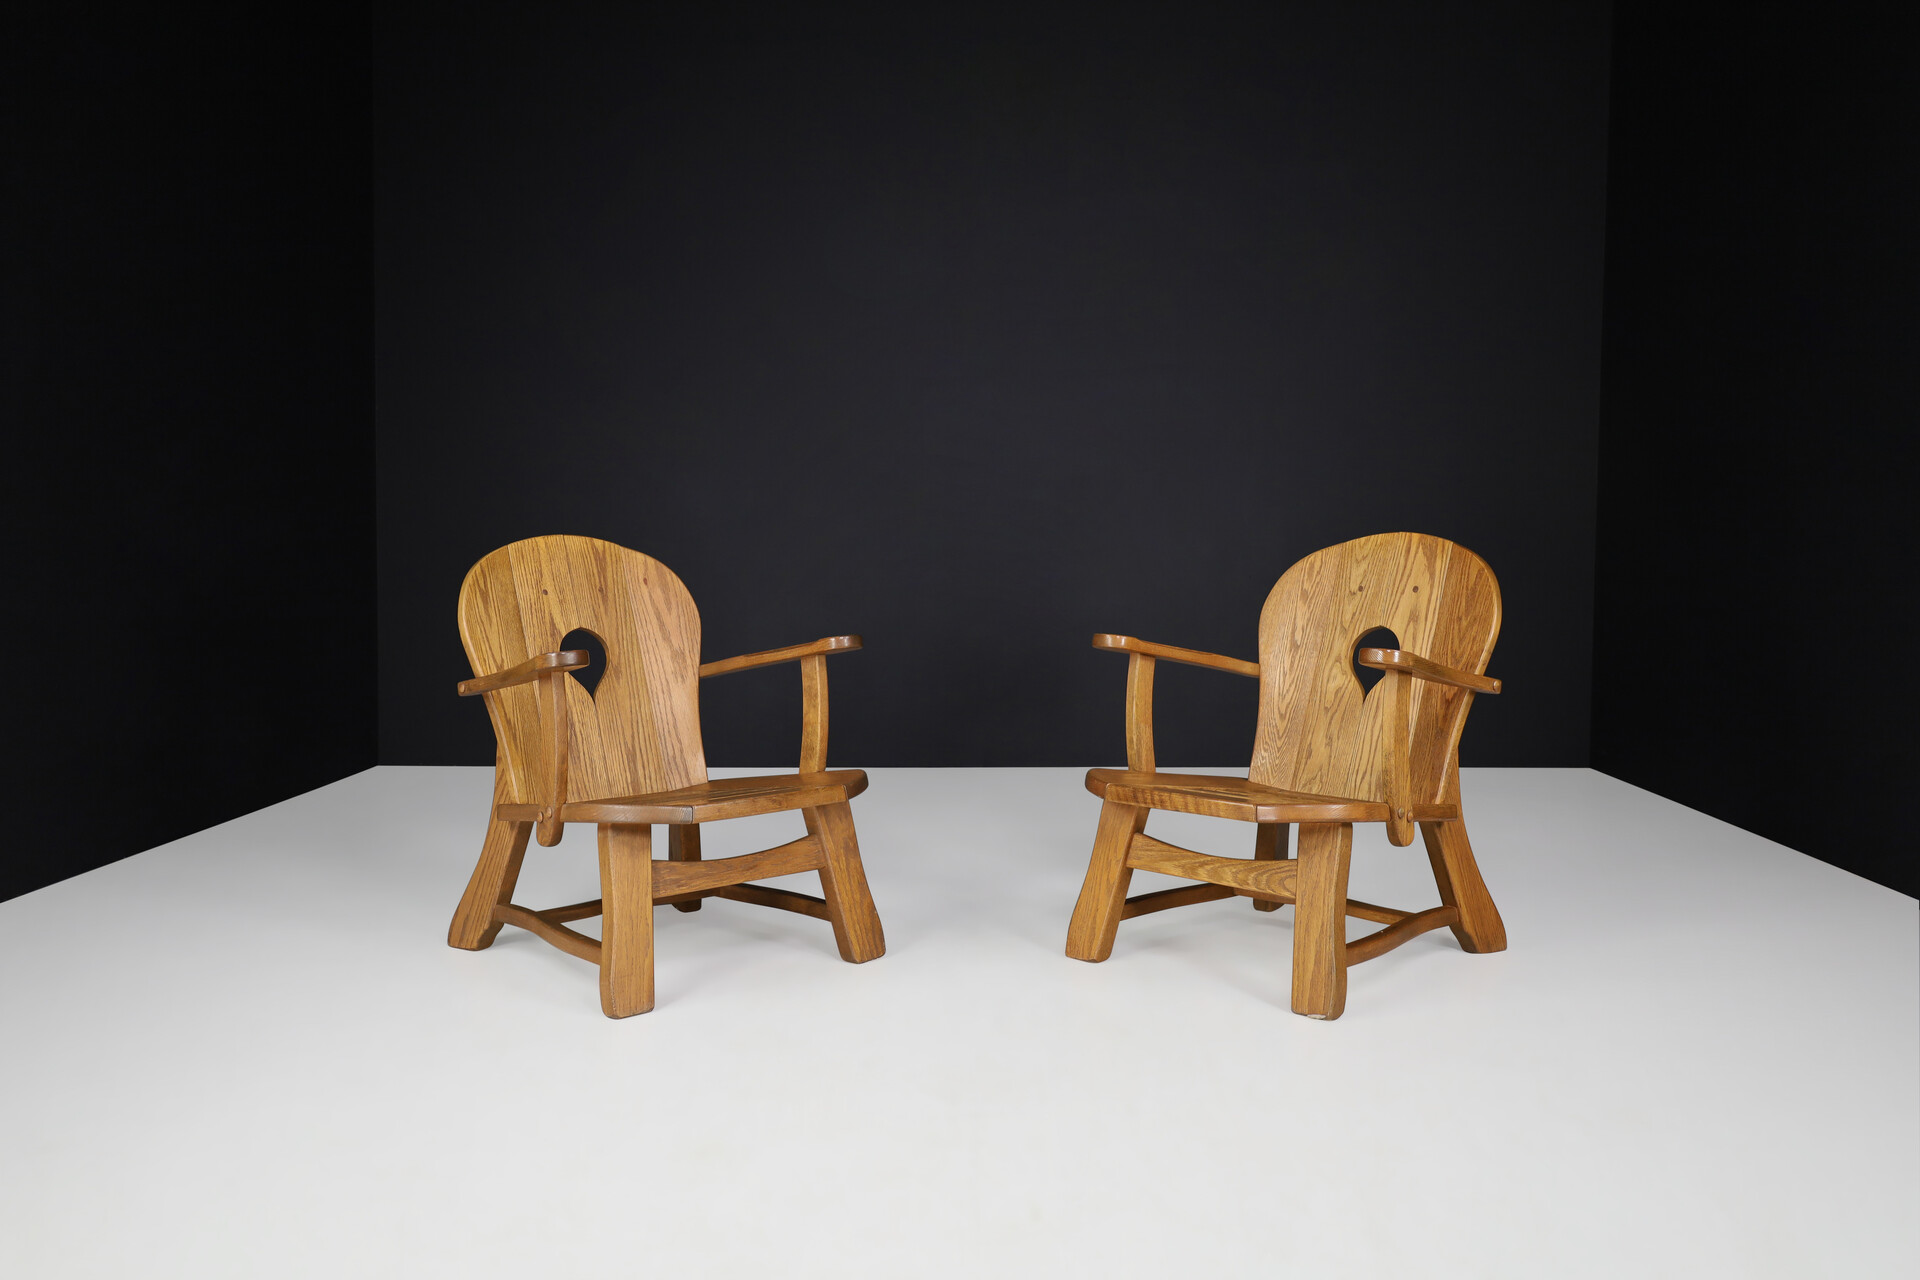 Brutalist Oak lounge chairs in solid oak, France 1960s Mid-20th century